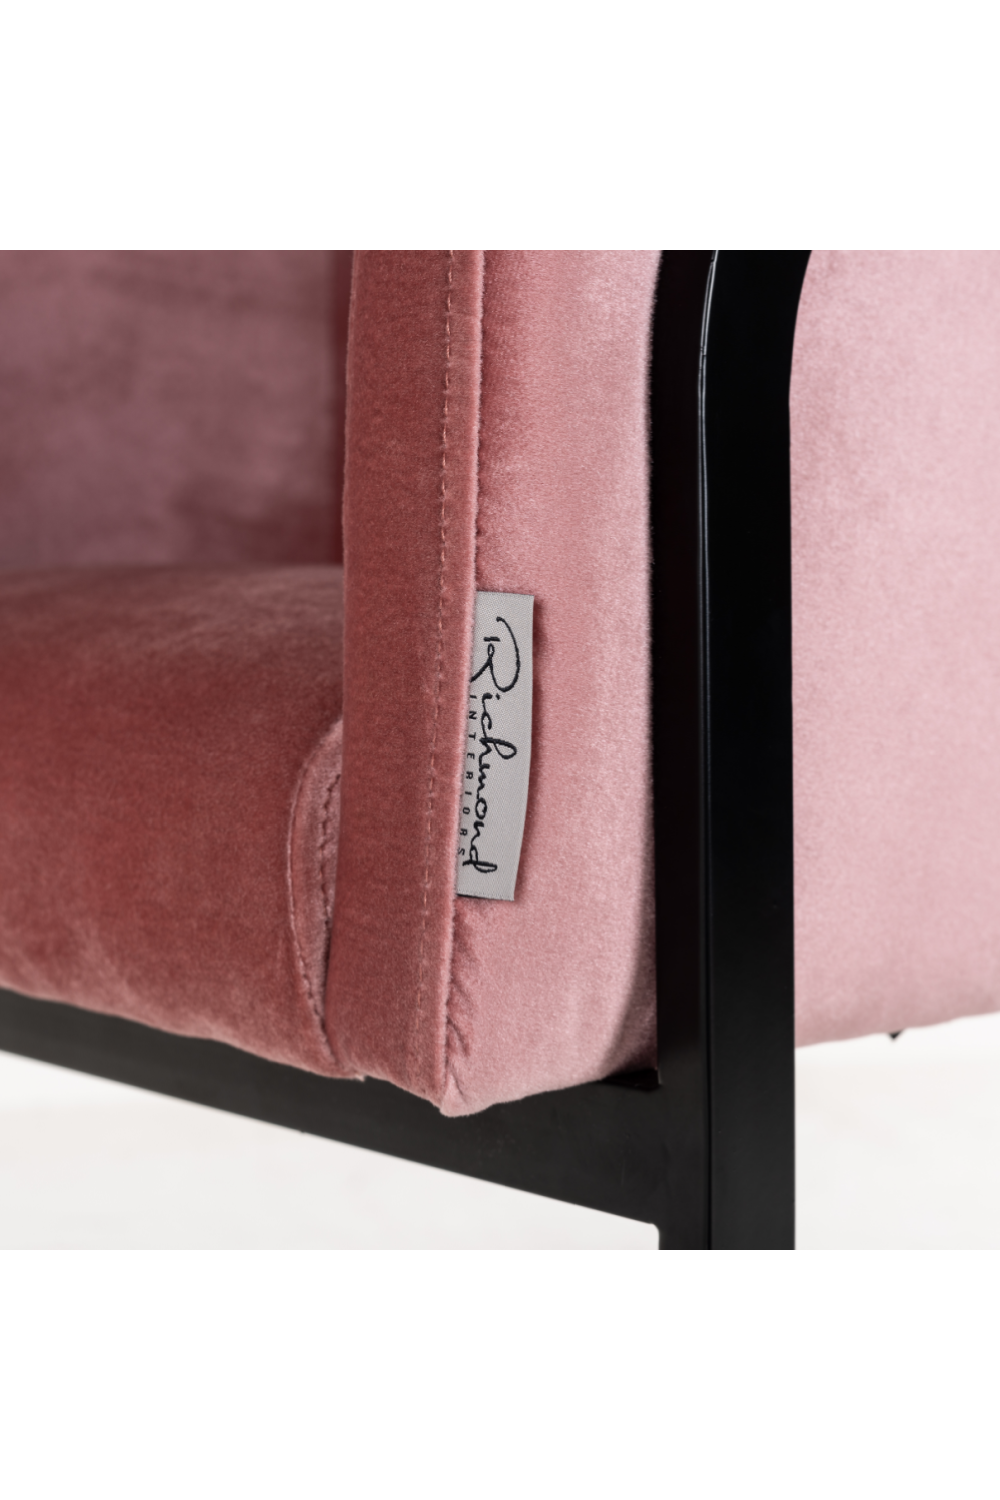 Blush Velvet Chair | OROA Chiara | OROA.com